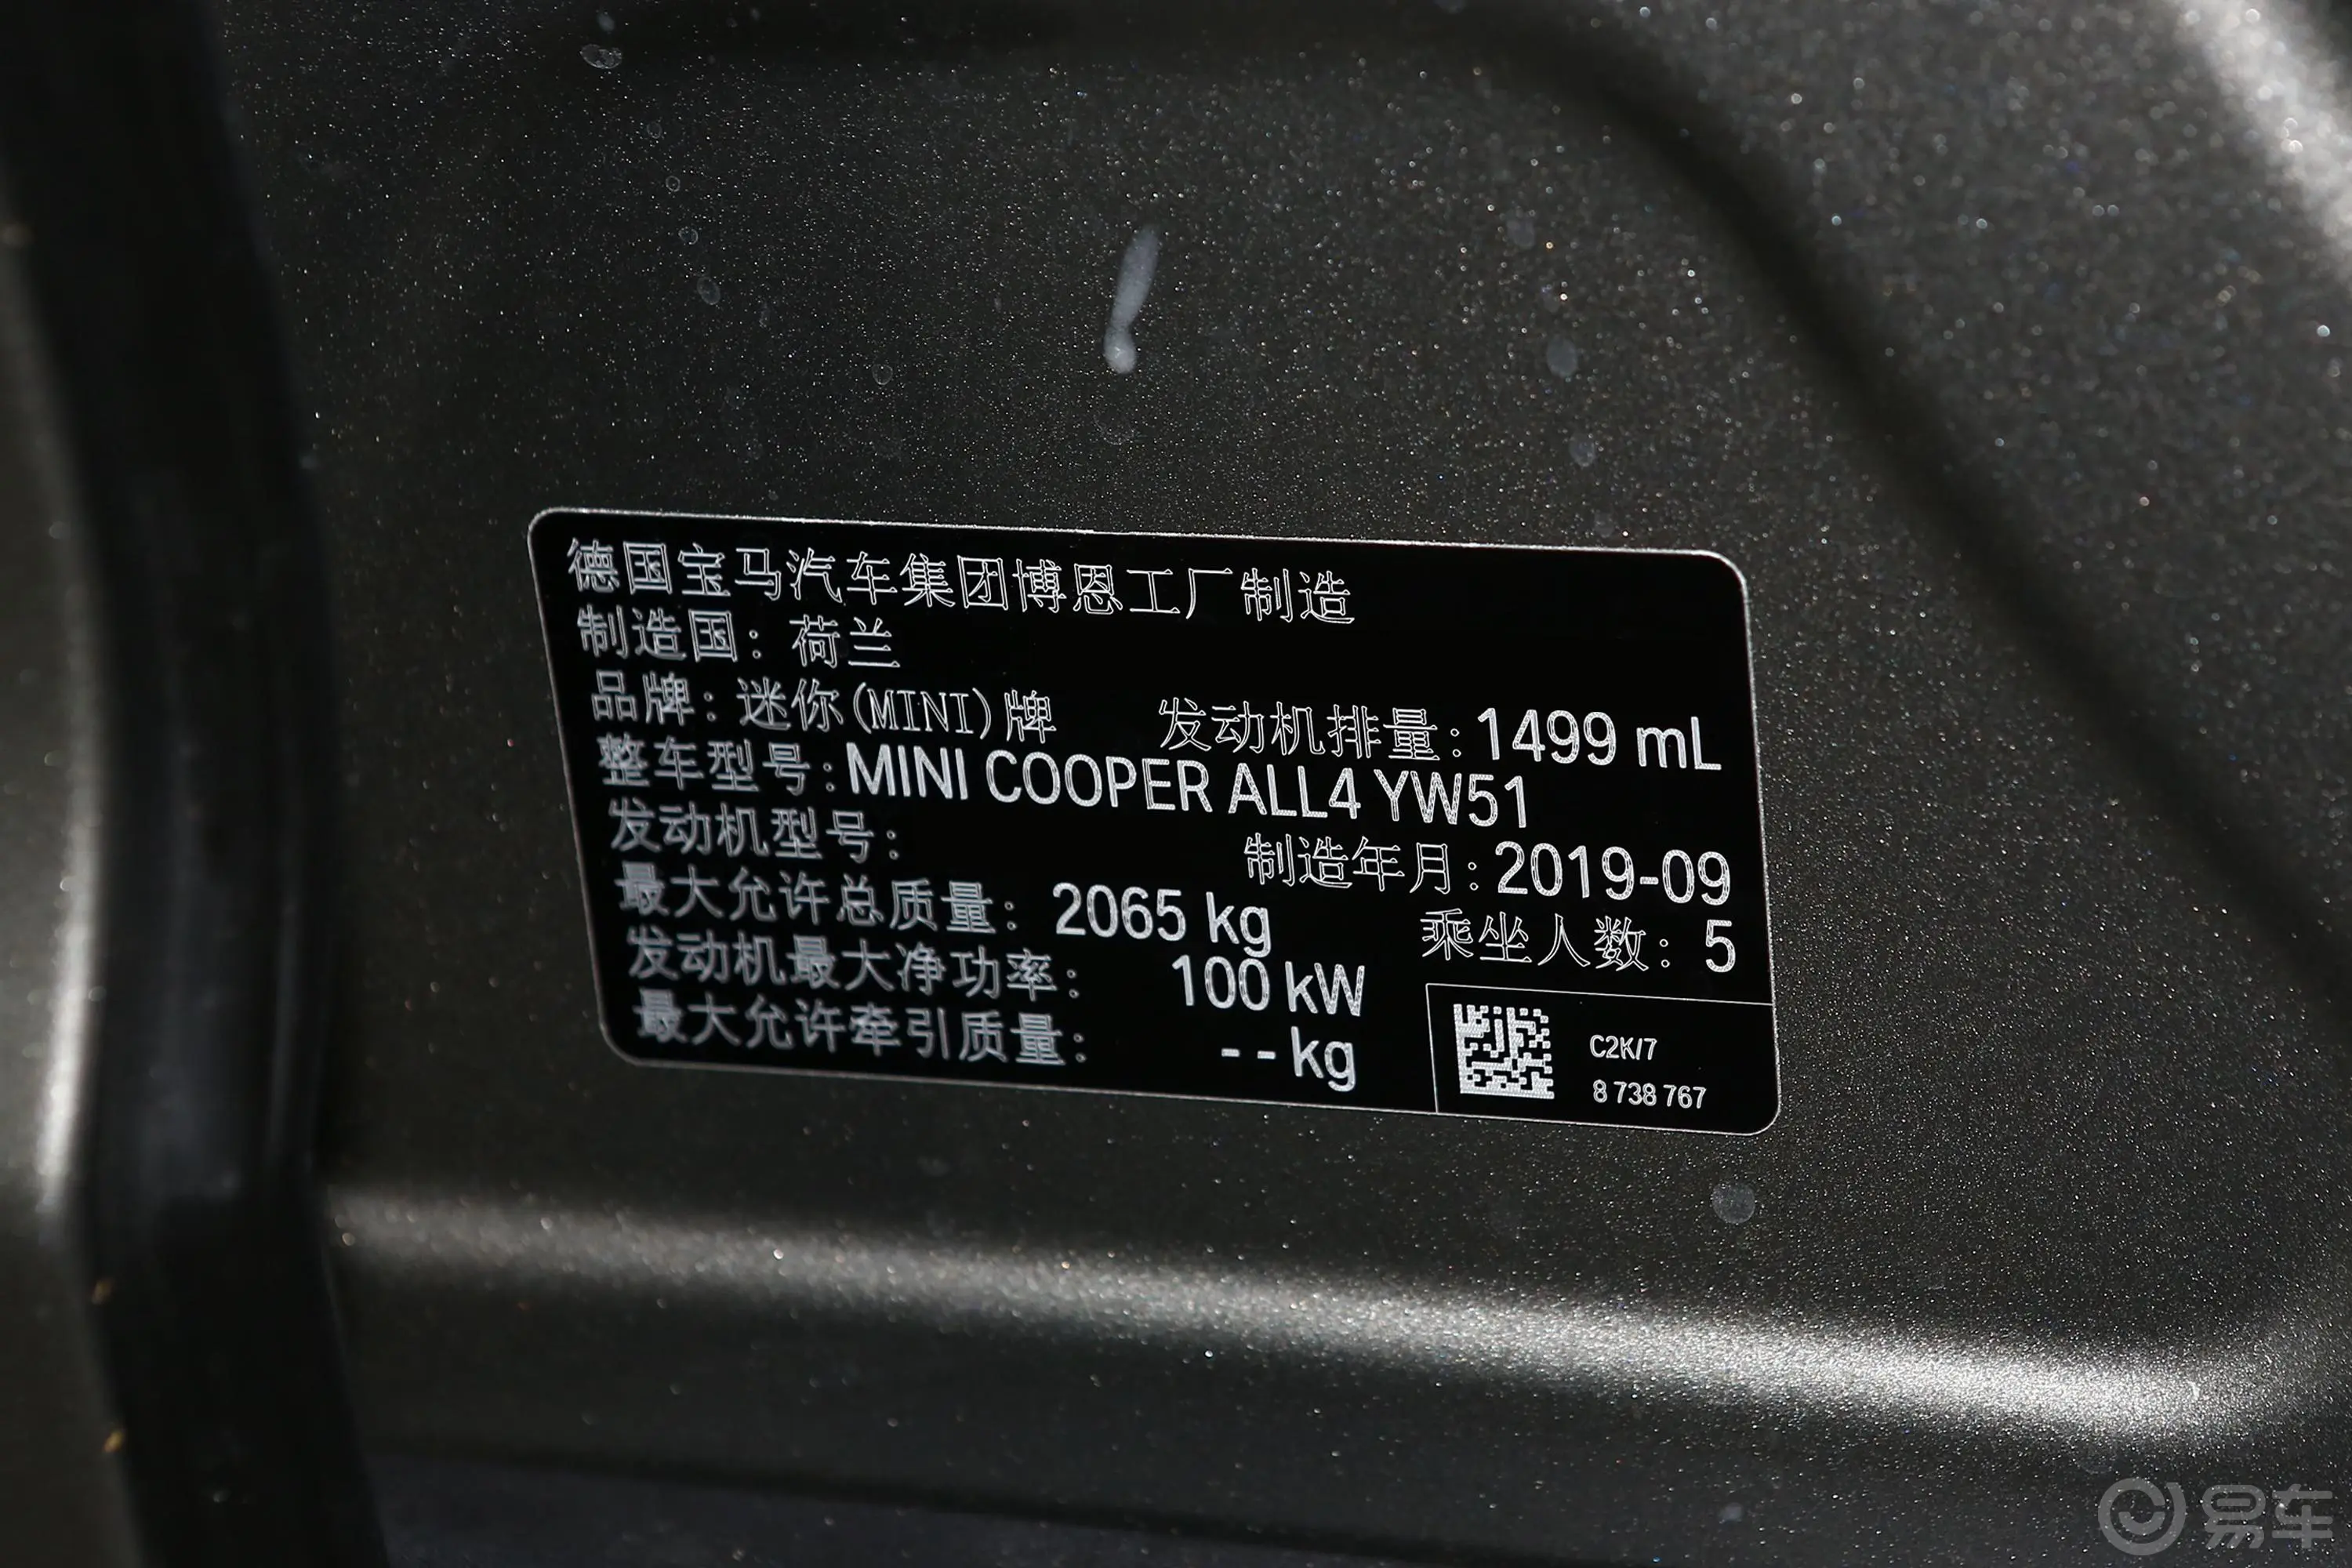 MINI COUNTRYMAN1.5T COOPER ALL4 经典派周末旅行版车辆信息铭牌